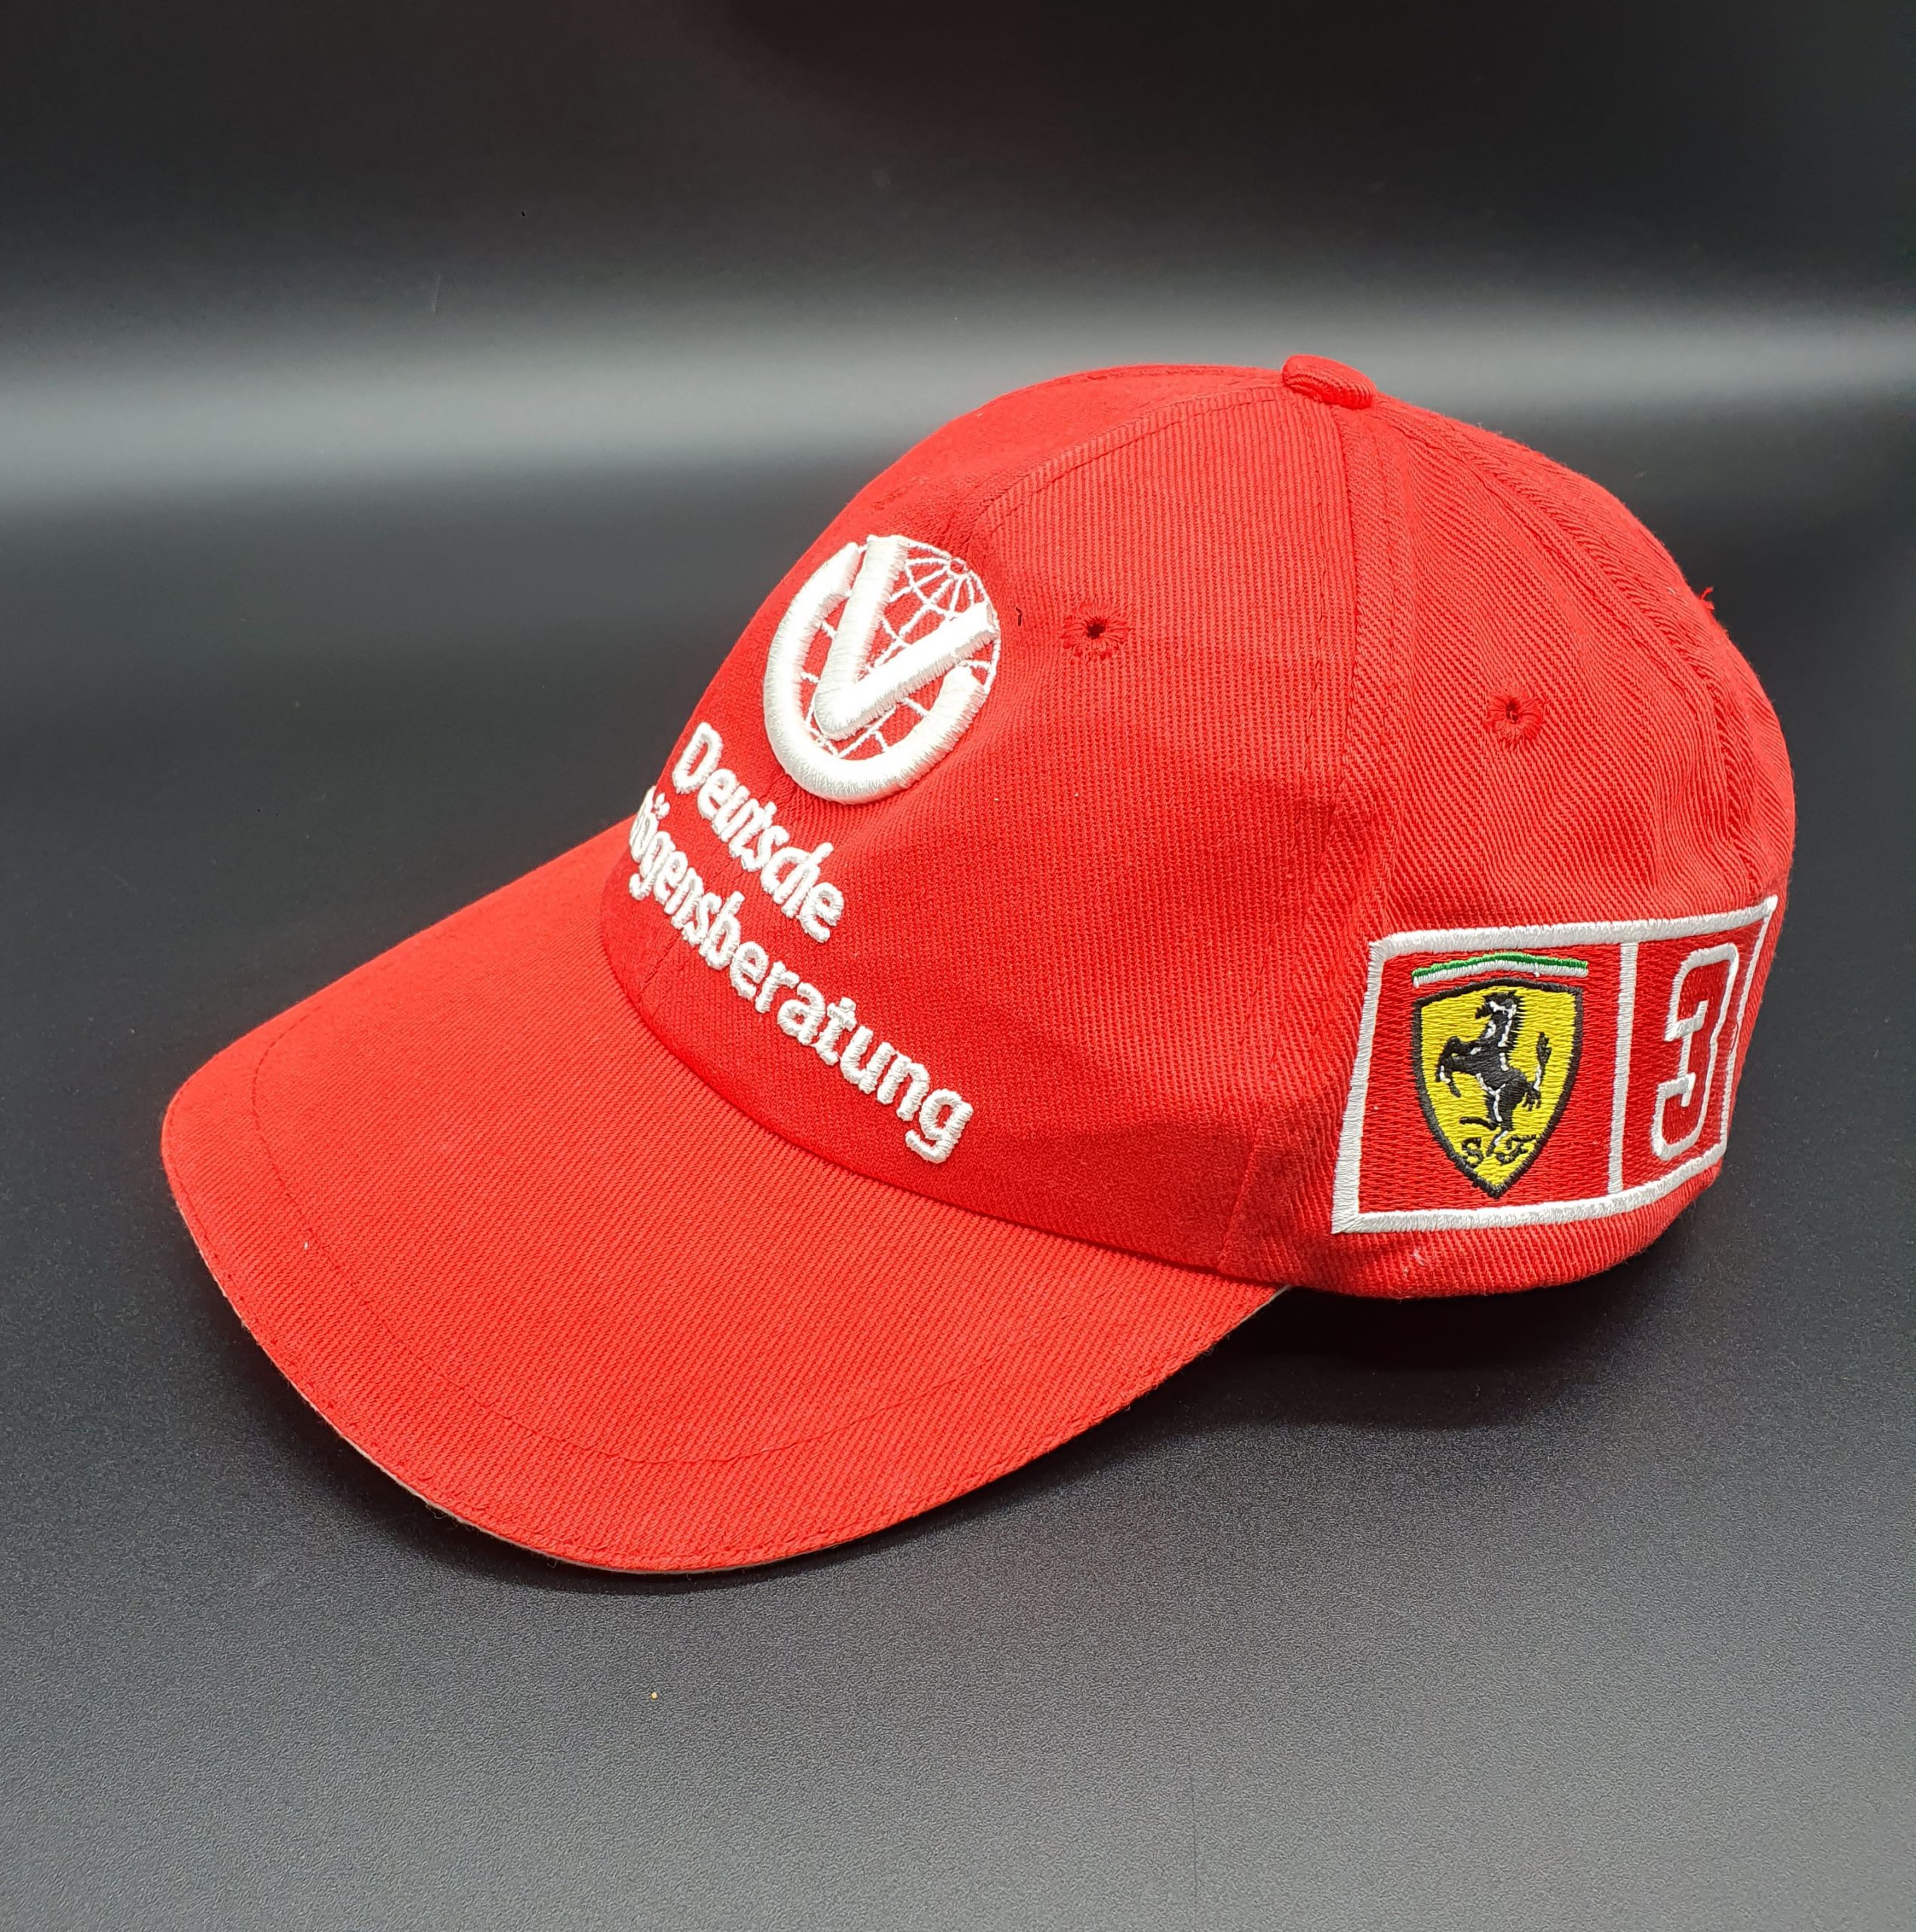 Ferrari cappellino Schumacher 2000 Deutsche Vermogensberatung